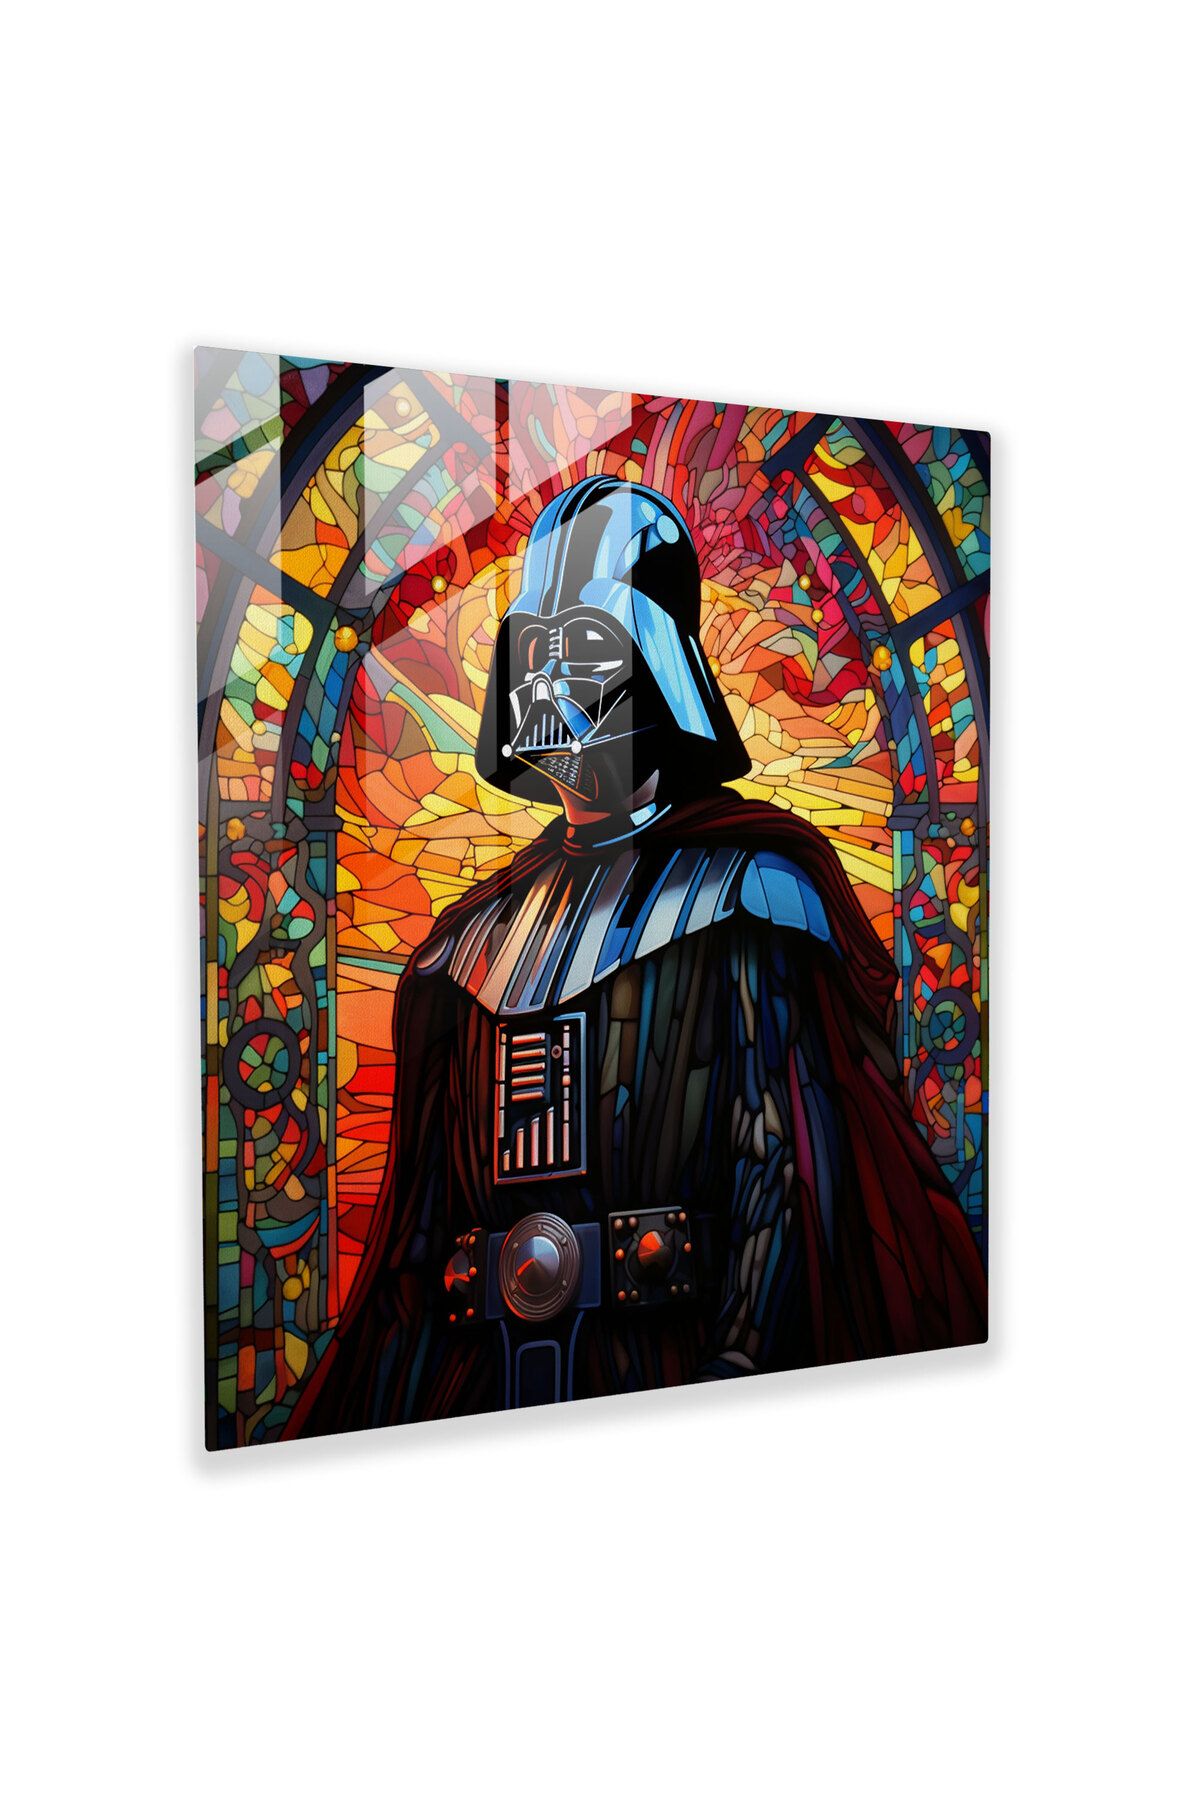 PaintedAnarchy Vitray baskı, renkli Darth Vader siluet, Darth Vader, ev dekorasyonu